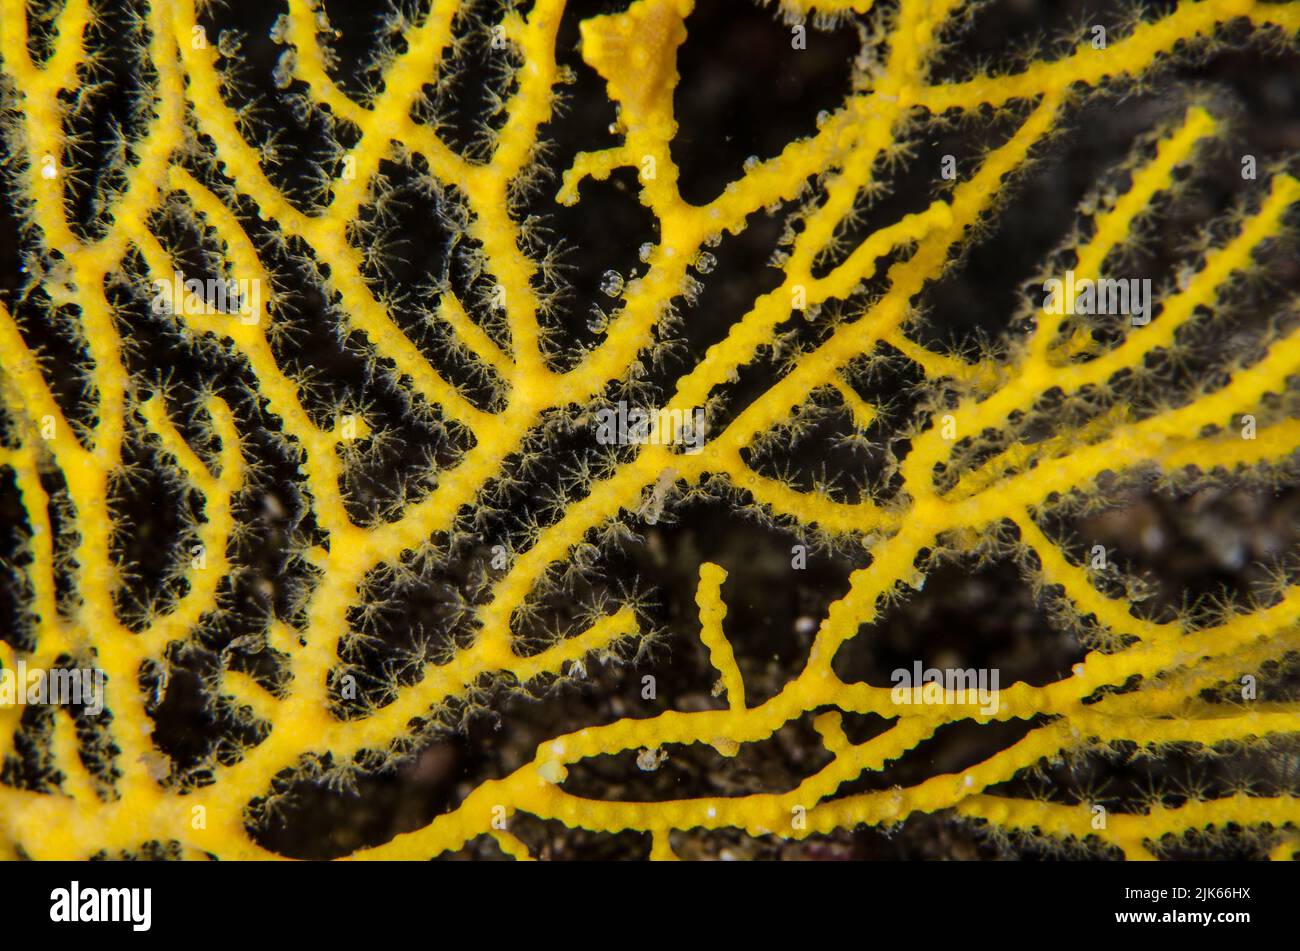 Ventilateur de mer, Acabaria sp., Melithaeidae, Anilao, Batangas, Philippines, Indo-océan pacifique, Asie Banque D'Images